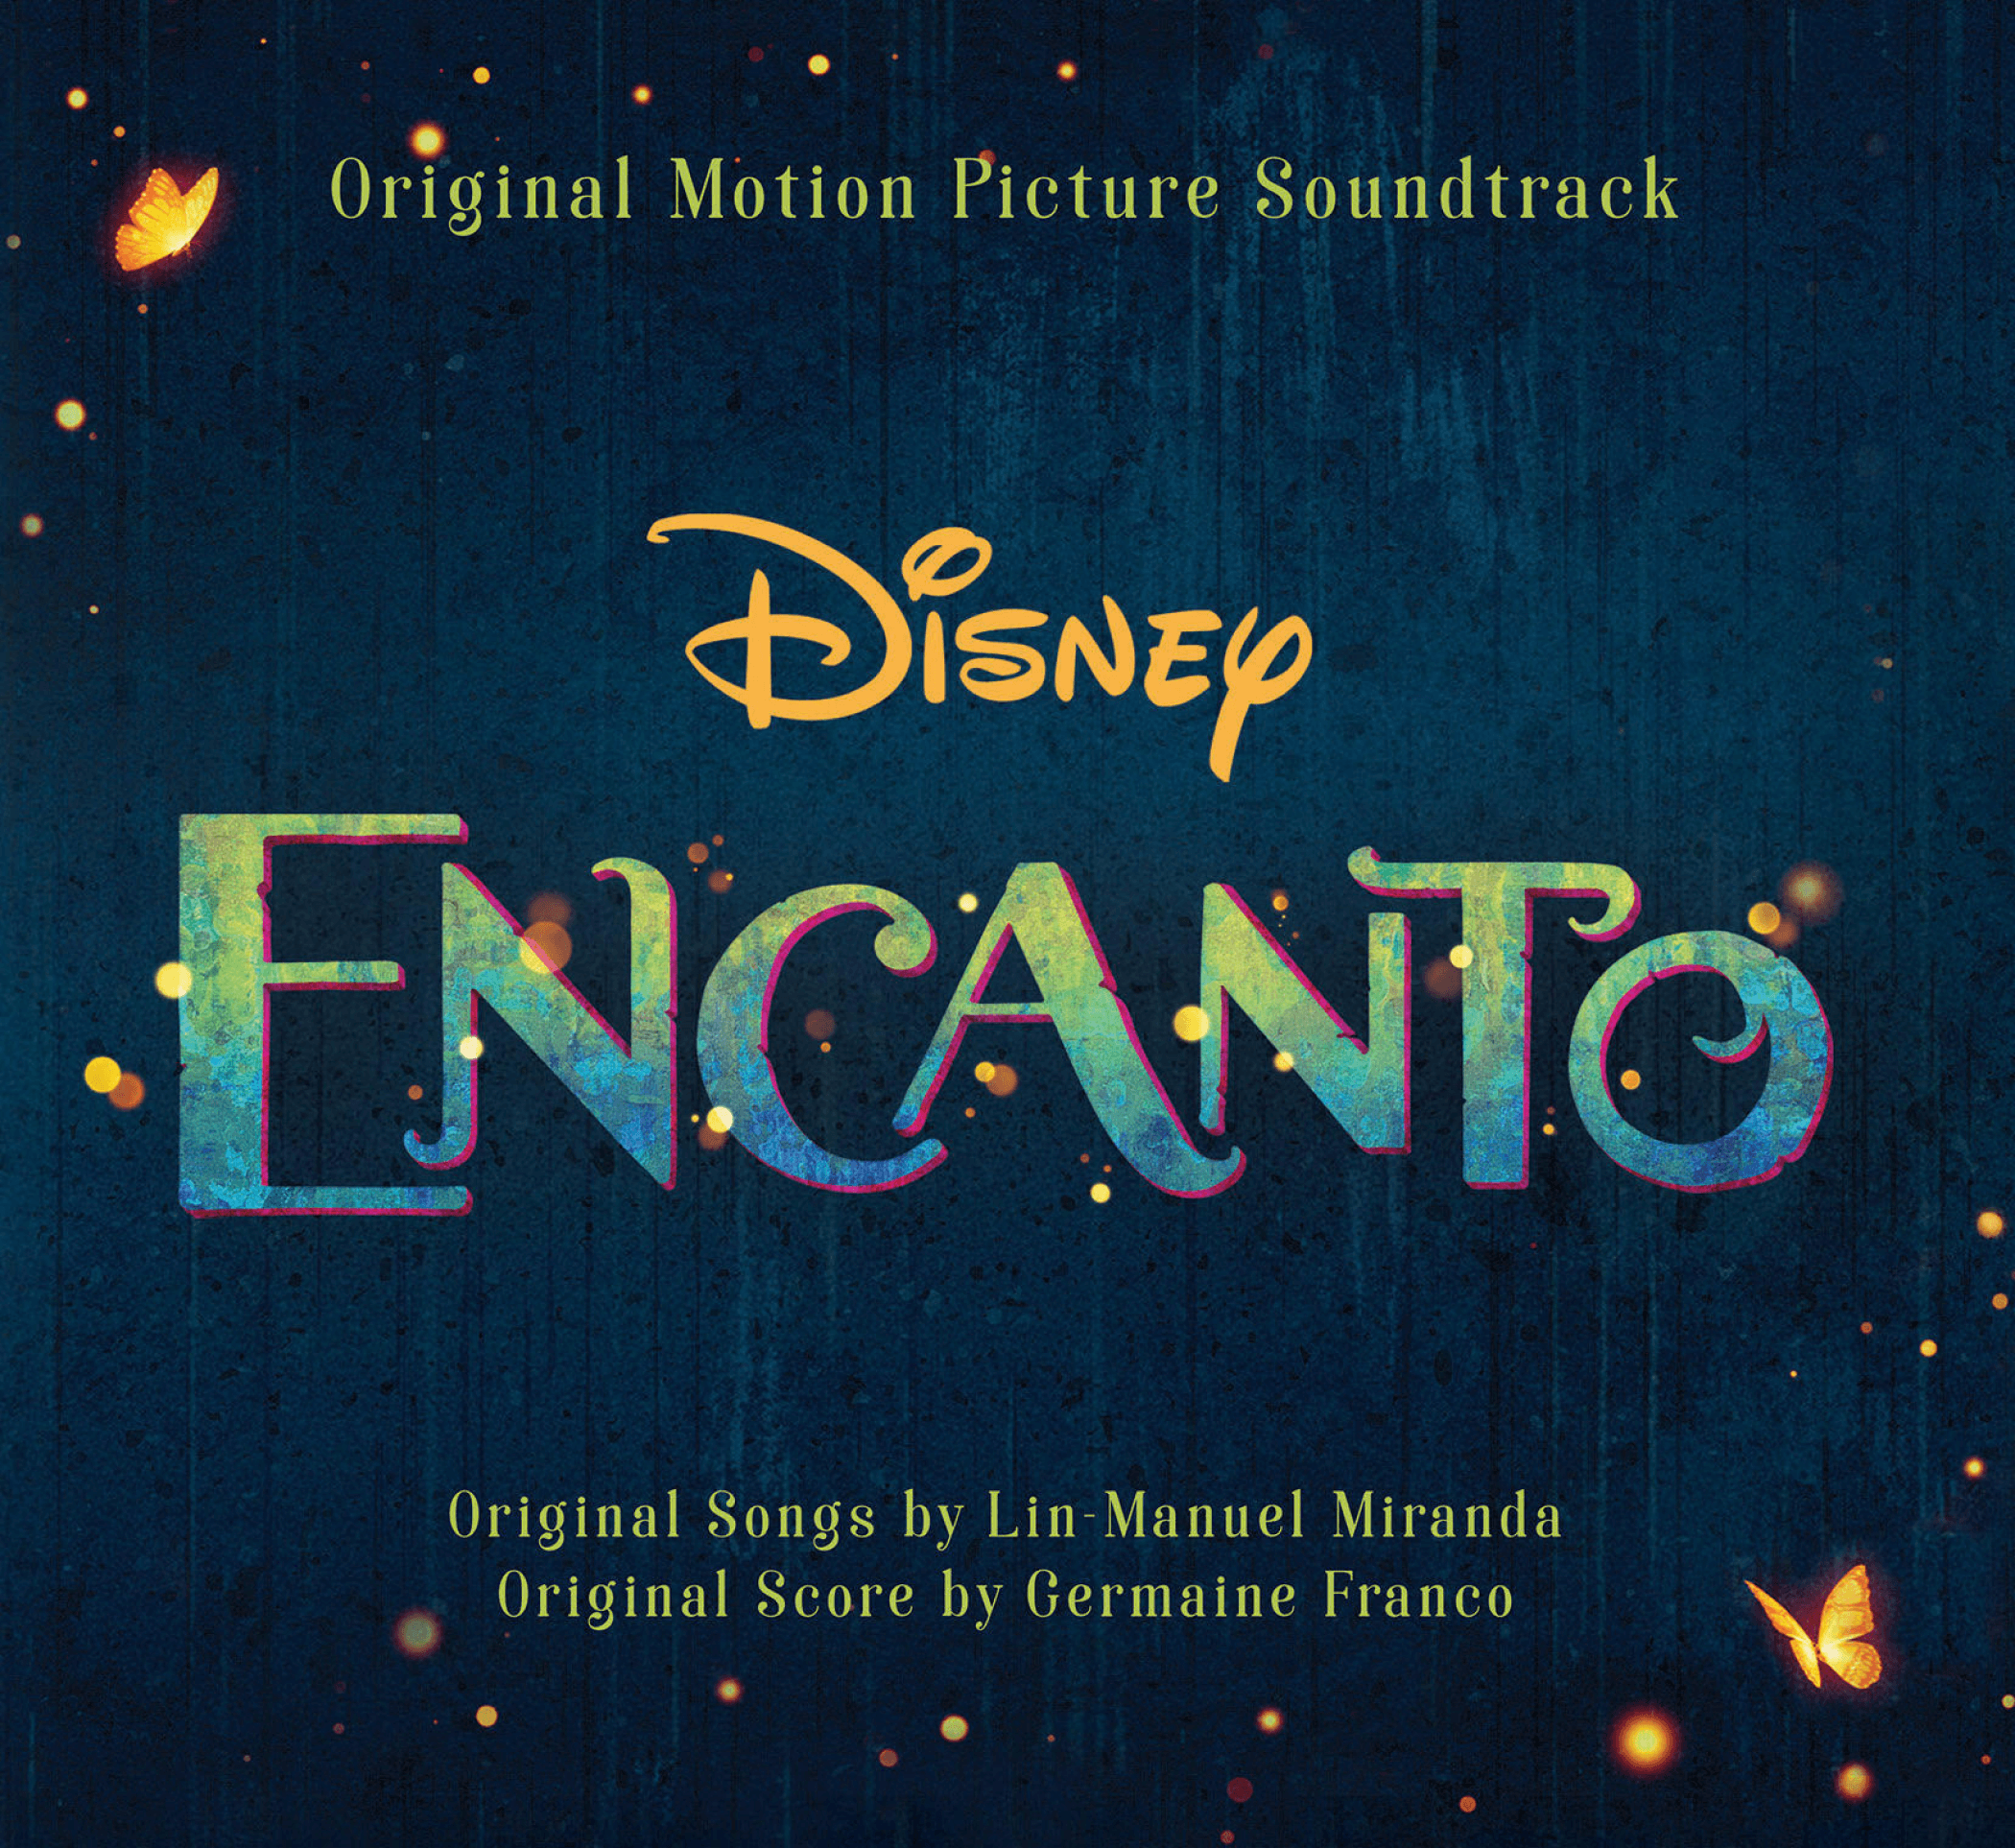 The soundtrack for Disney's Encanto